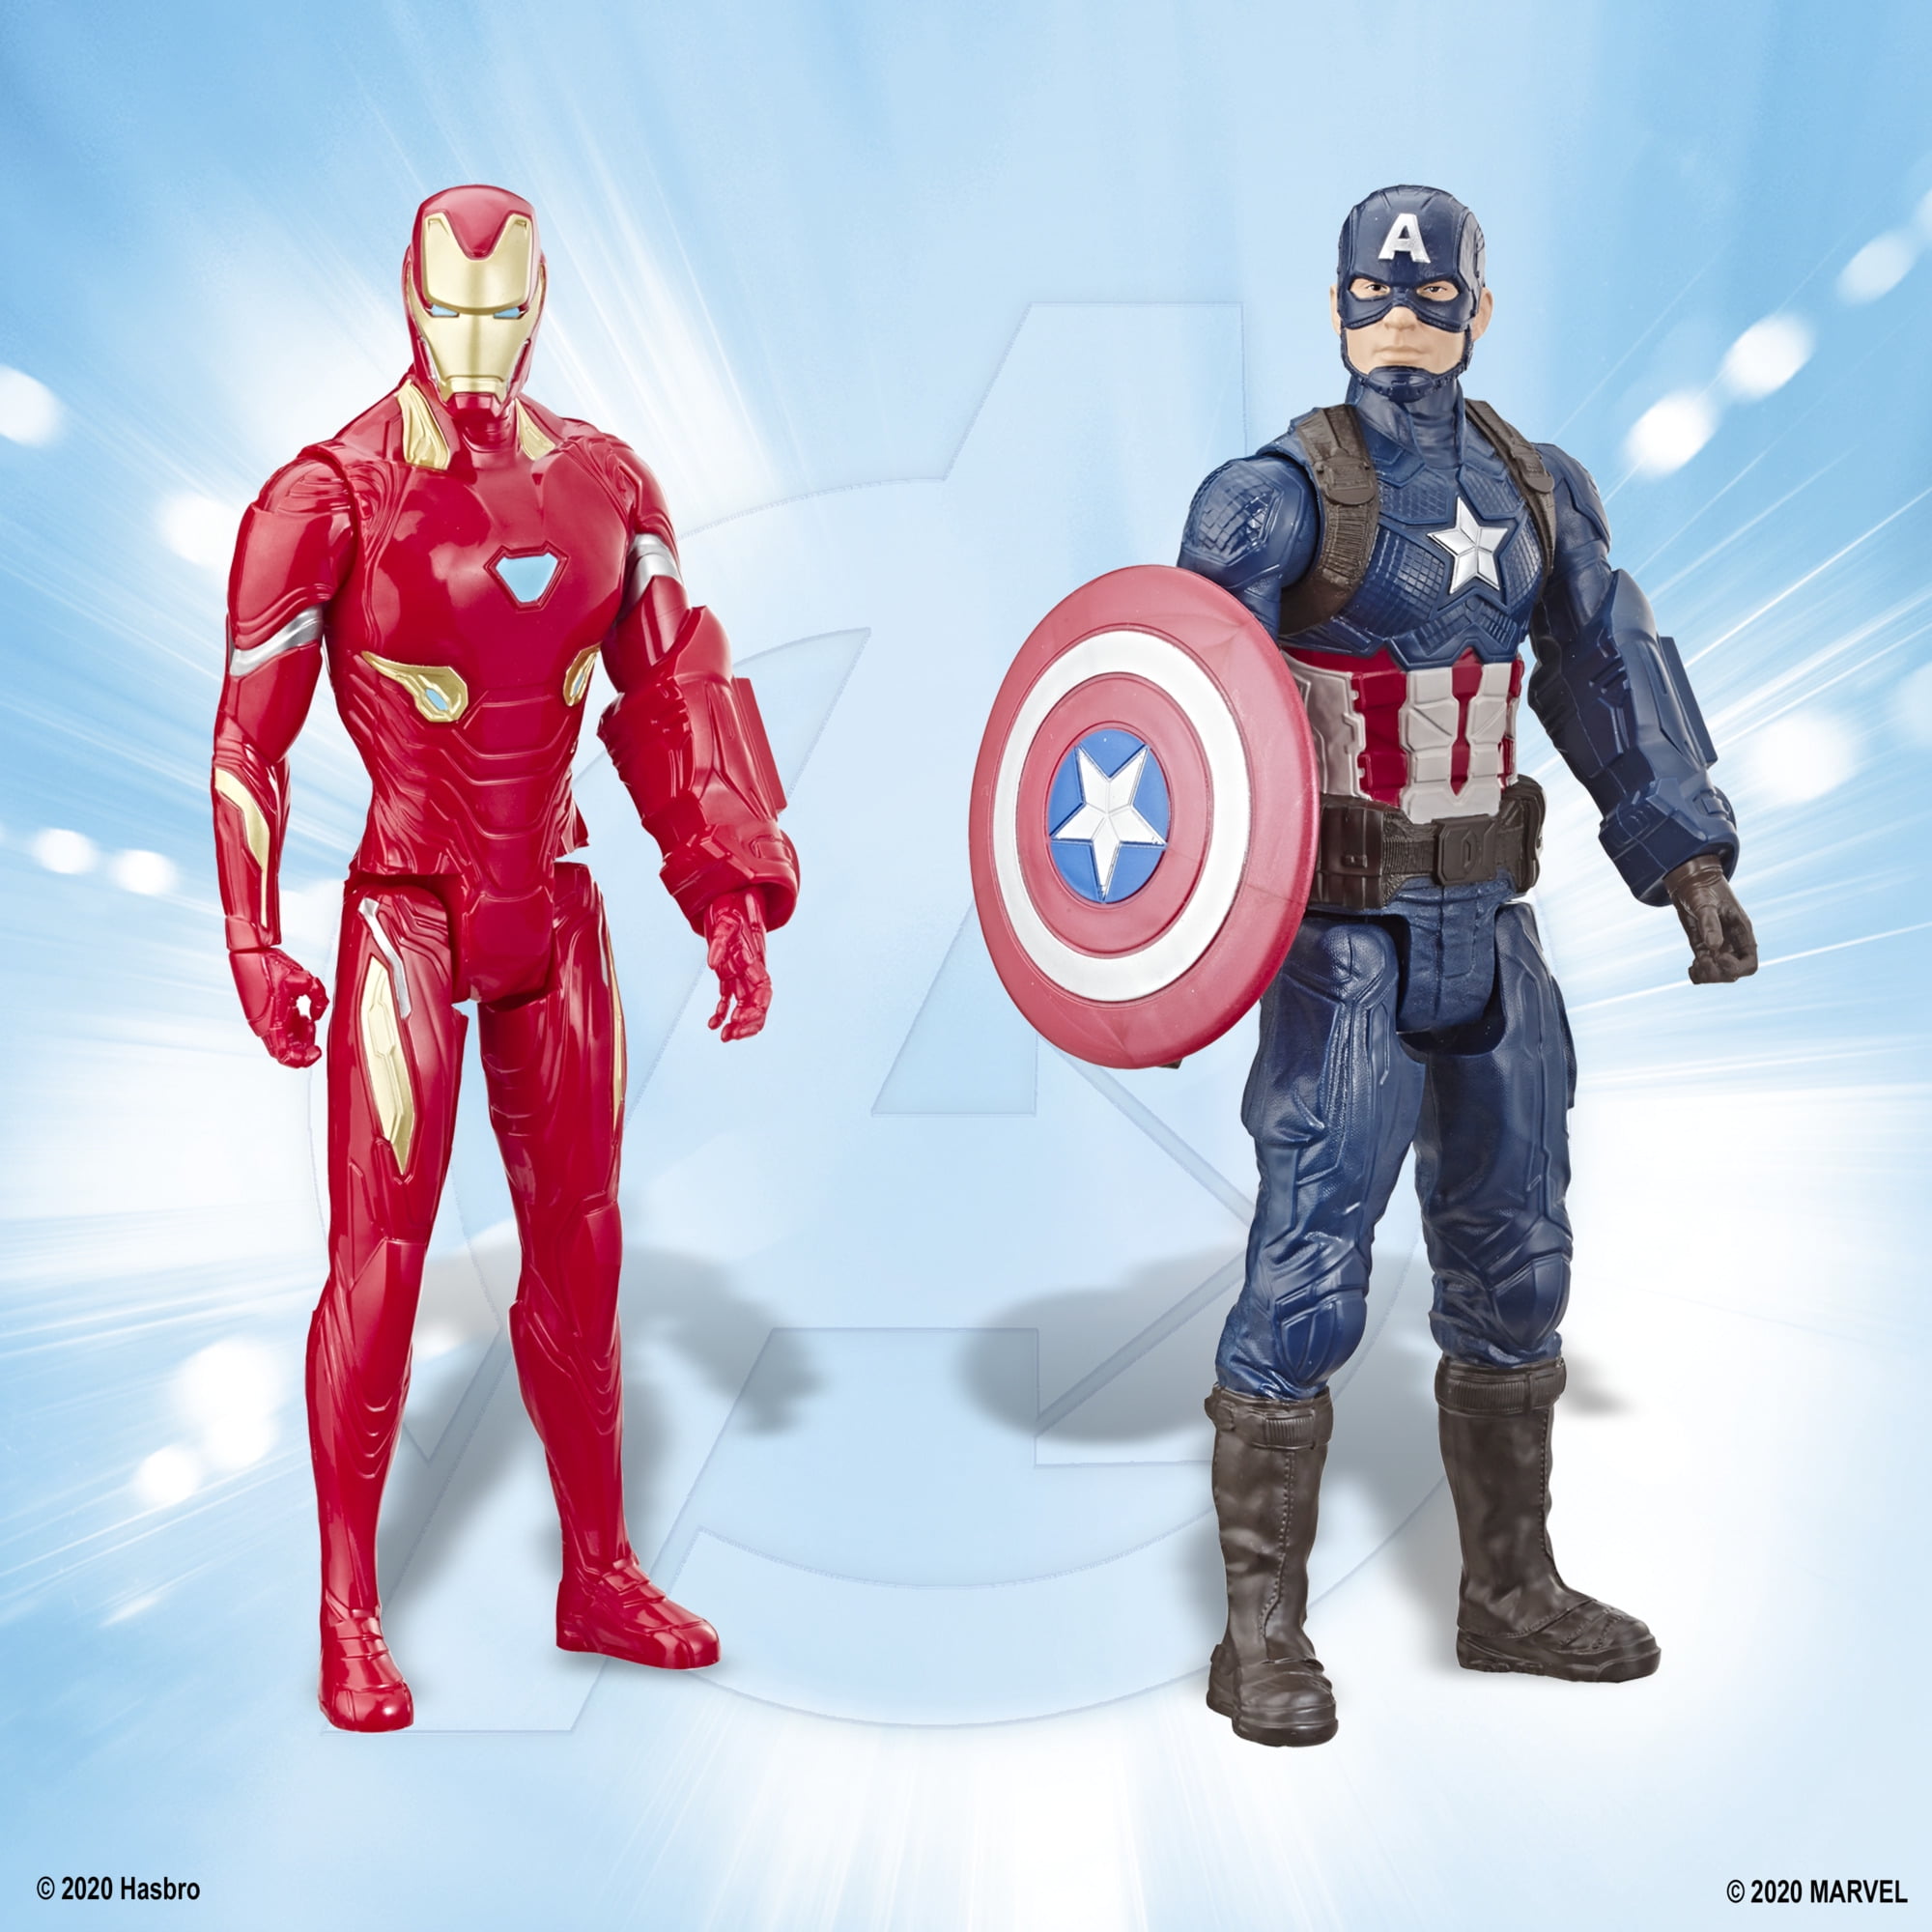 OBLRXM Avengers Figurine, Avengers Endgame Titan Hero Series Lot de 11  Figurines, Spiderman,Iron-Man, Captain America, Thor